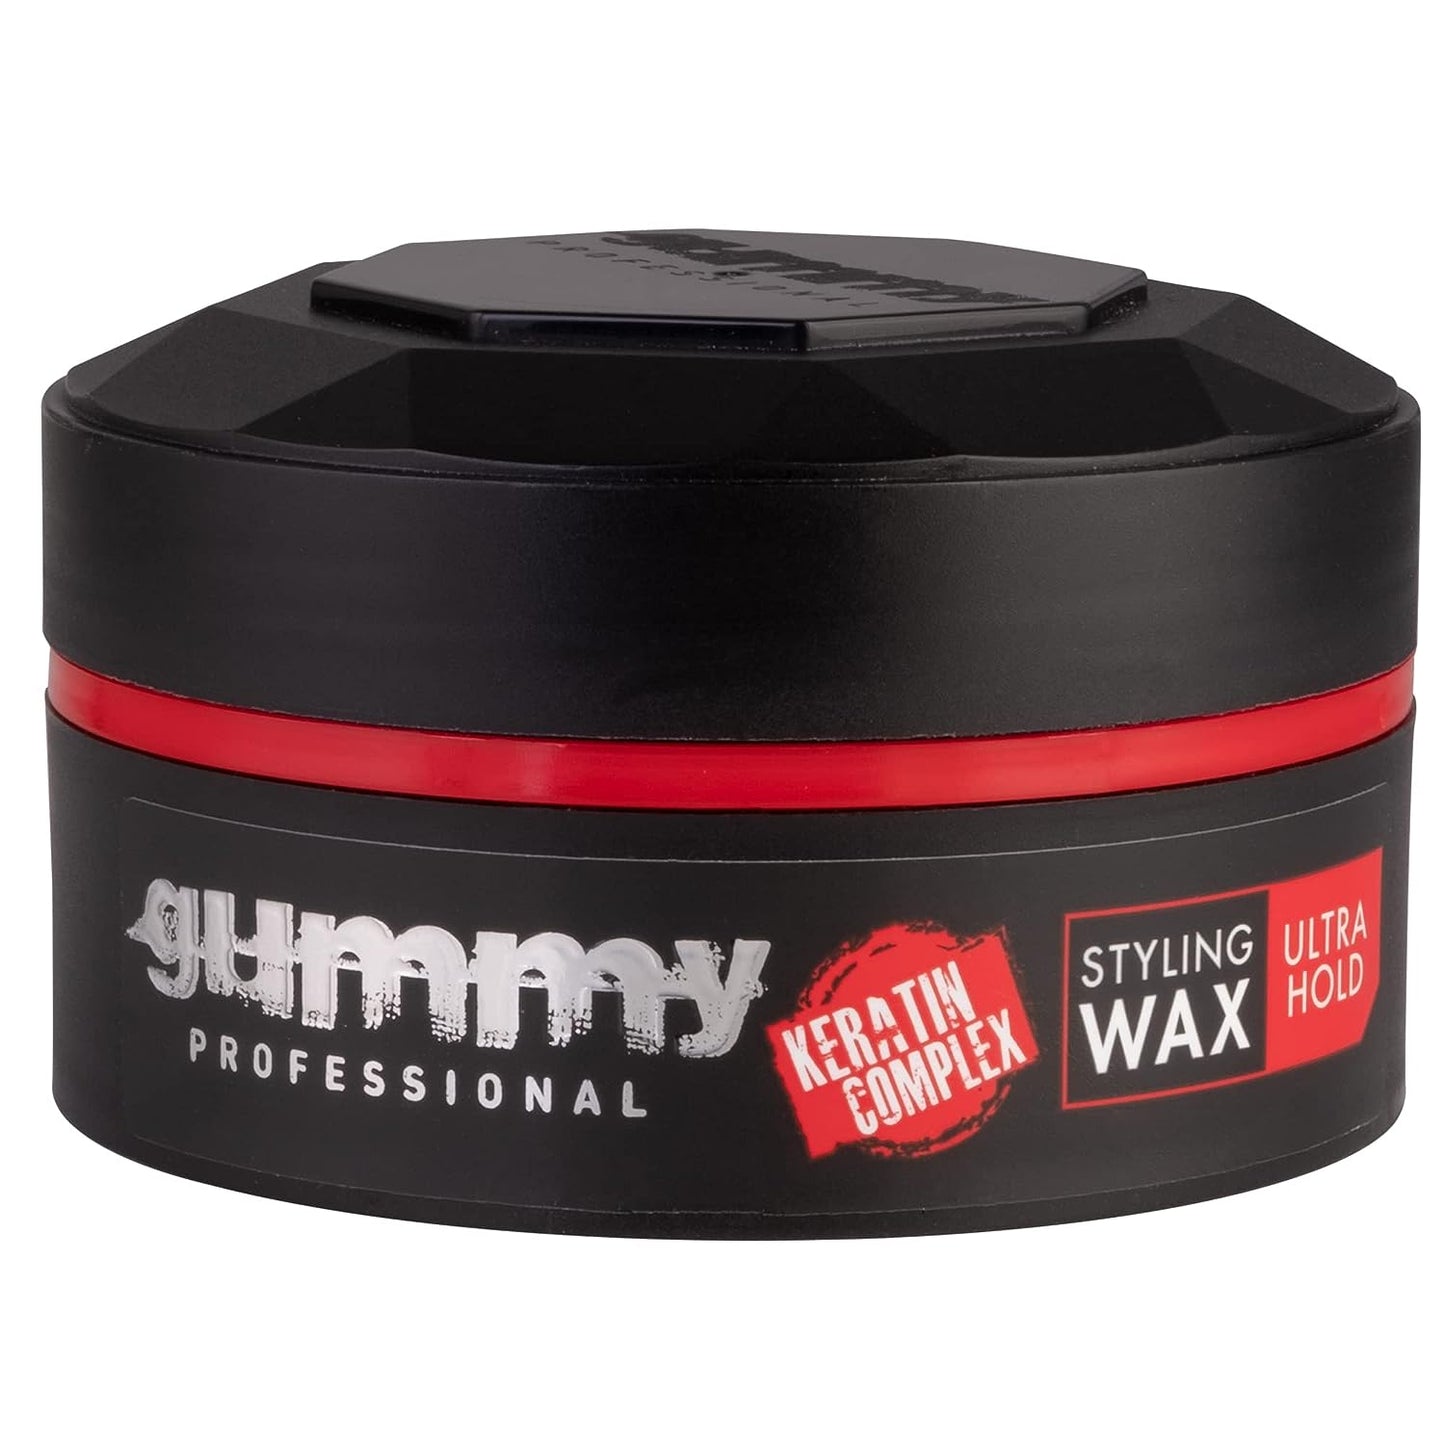 Gummy Wax | Hair Styling Wax | Matte Finish Hair Wax | Matte finish wax